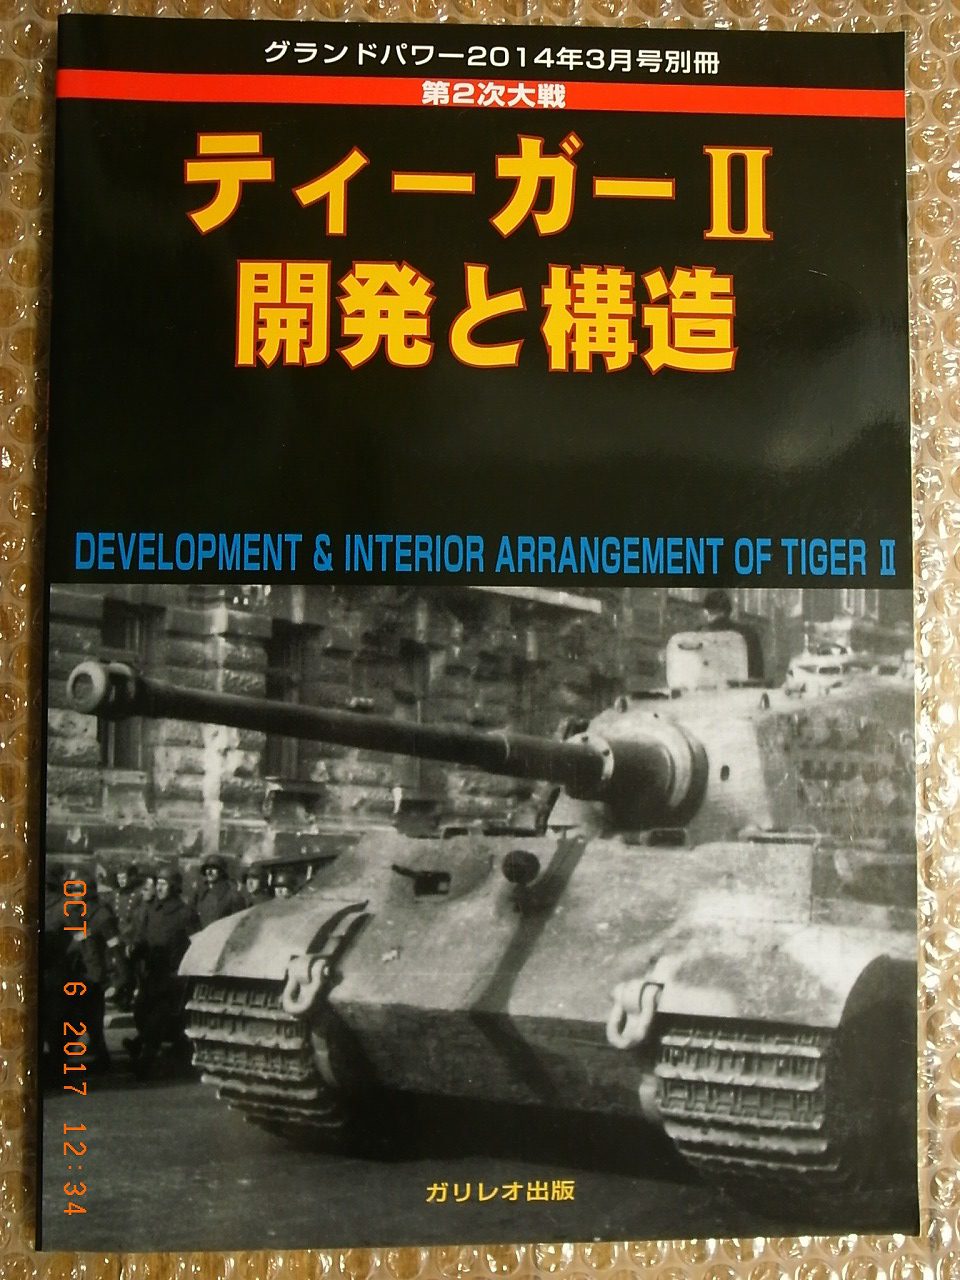 German Tiger Ii Heavy Tank Pictorial Book Galileo Publishing Japan